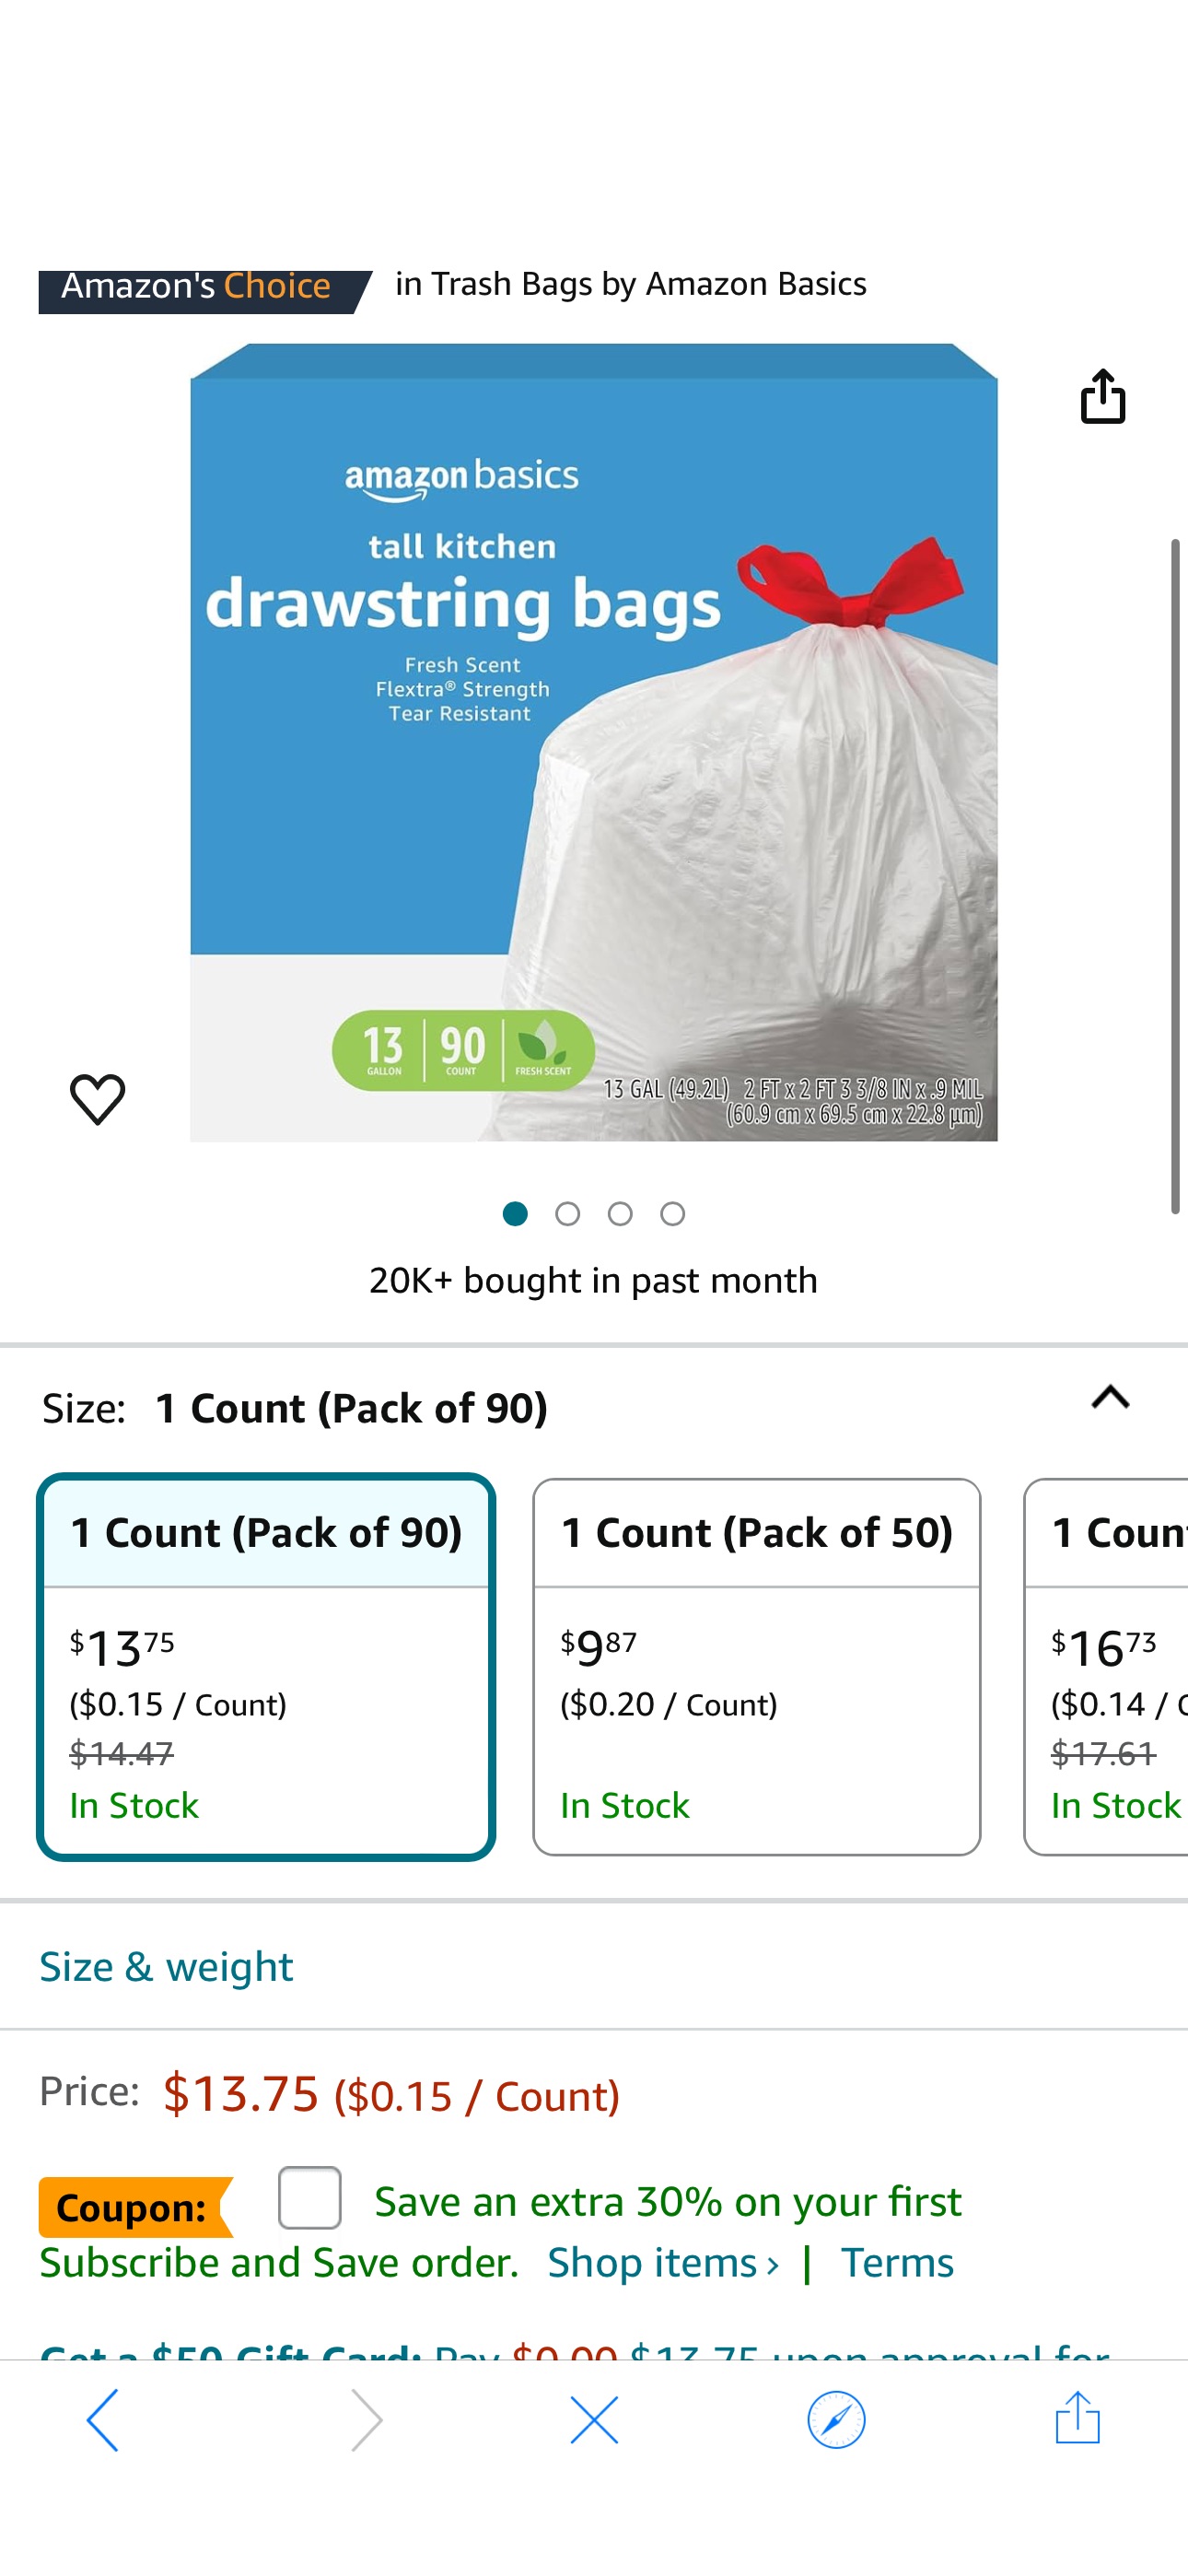 Amazon.com: Amazon Basics Flextra Tall Kitchen Drawstring Trash Bags, Fresh Scent, 13 Gallon, 90 Count : Health & Household